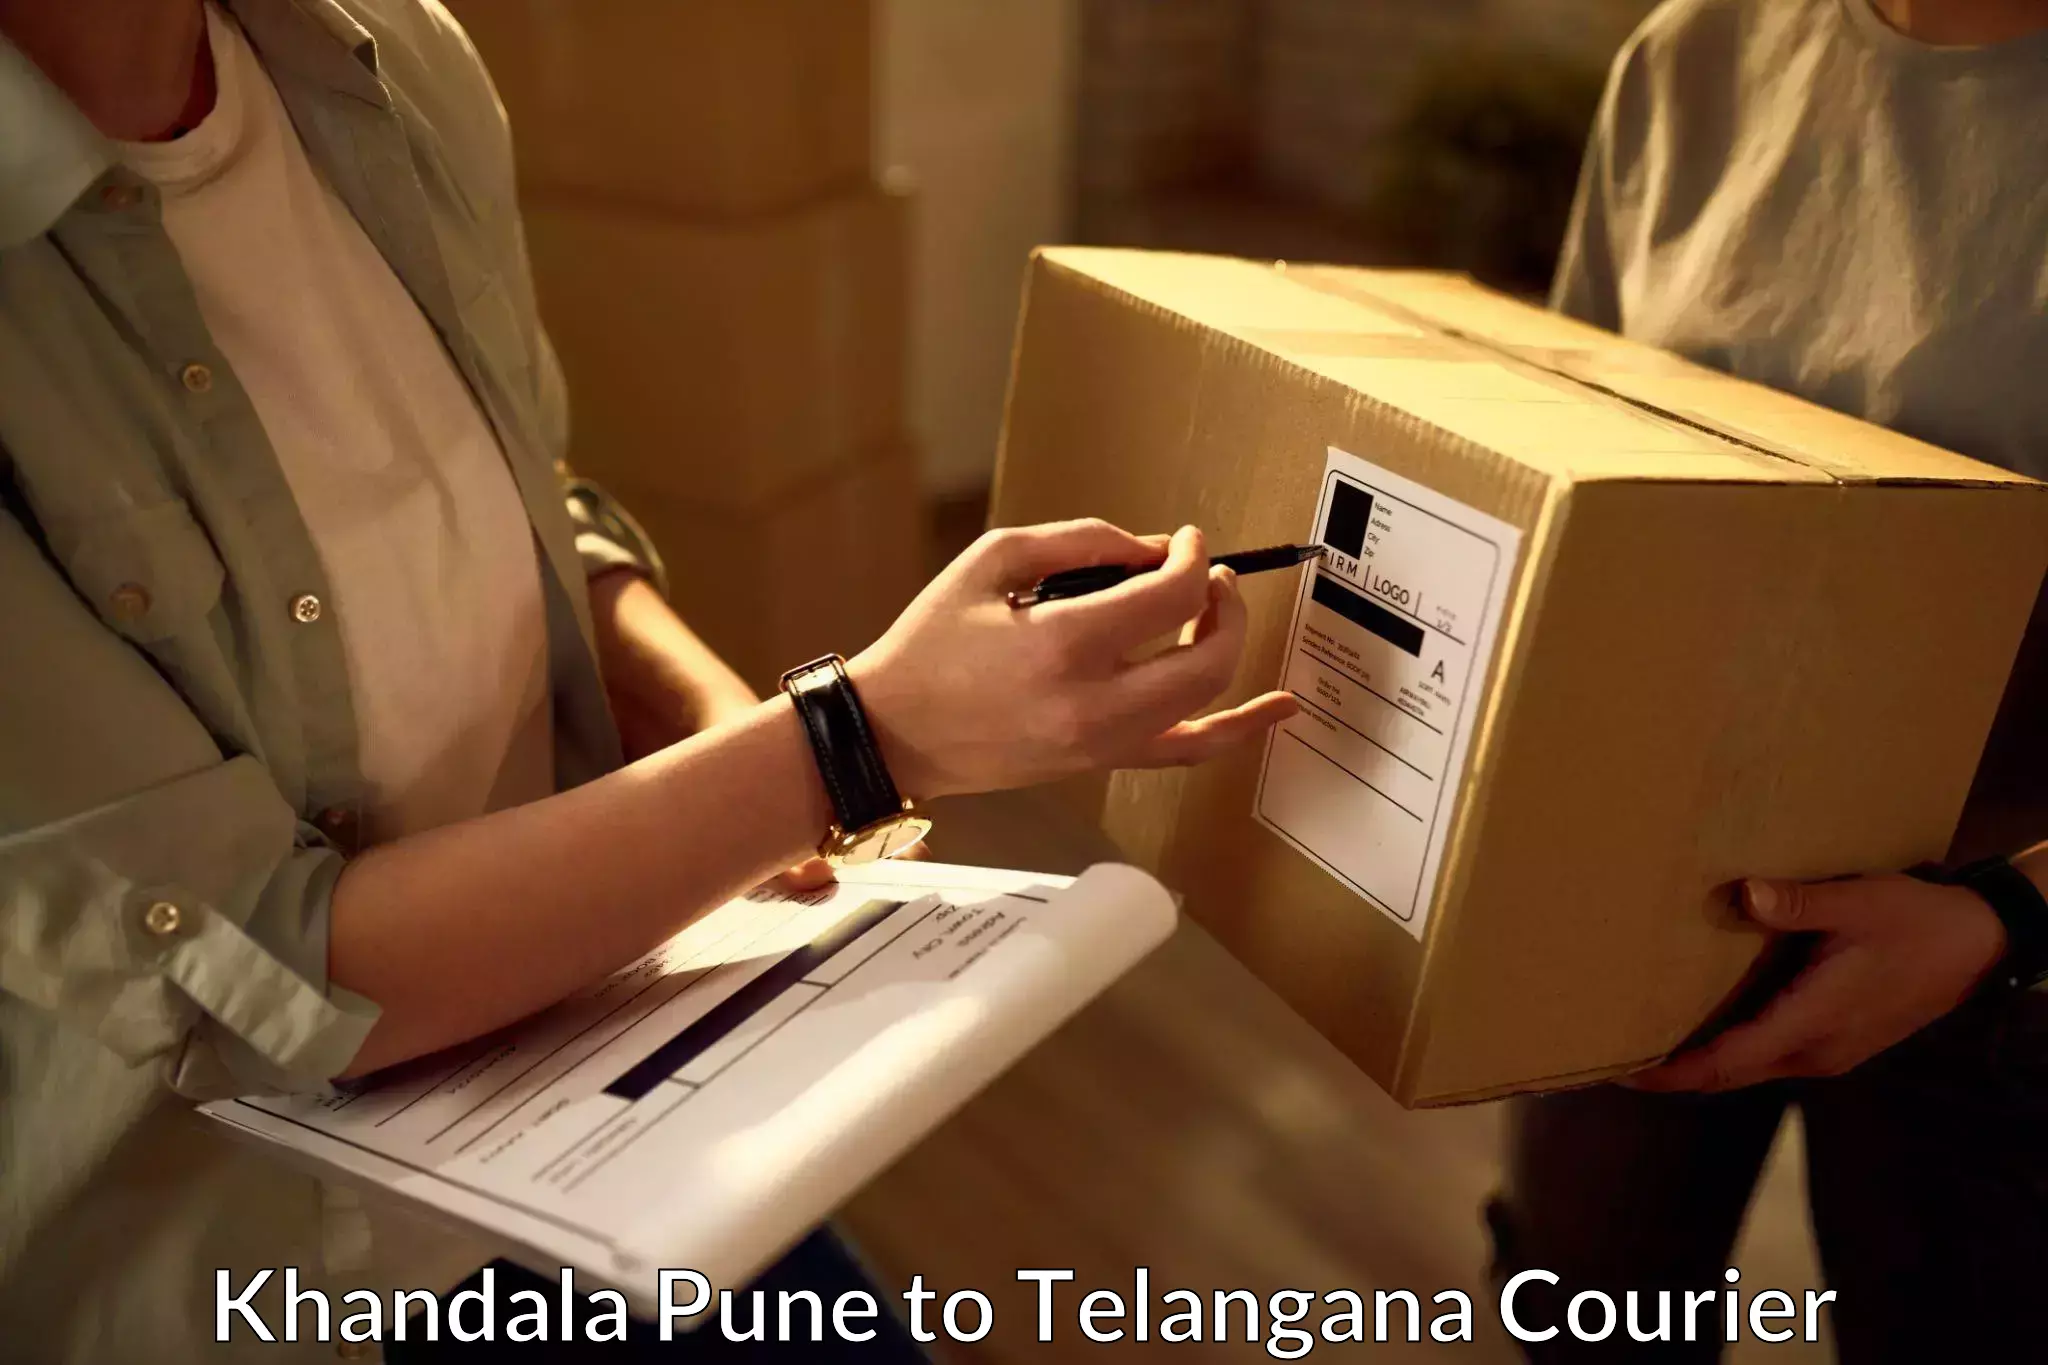 Affordable parcel service Khandala Pune to Telangana